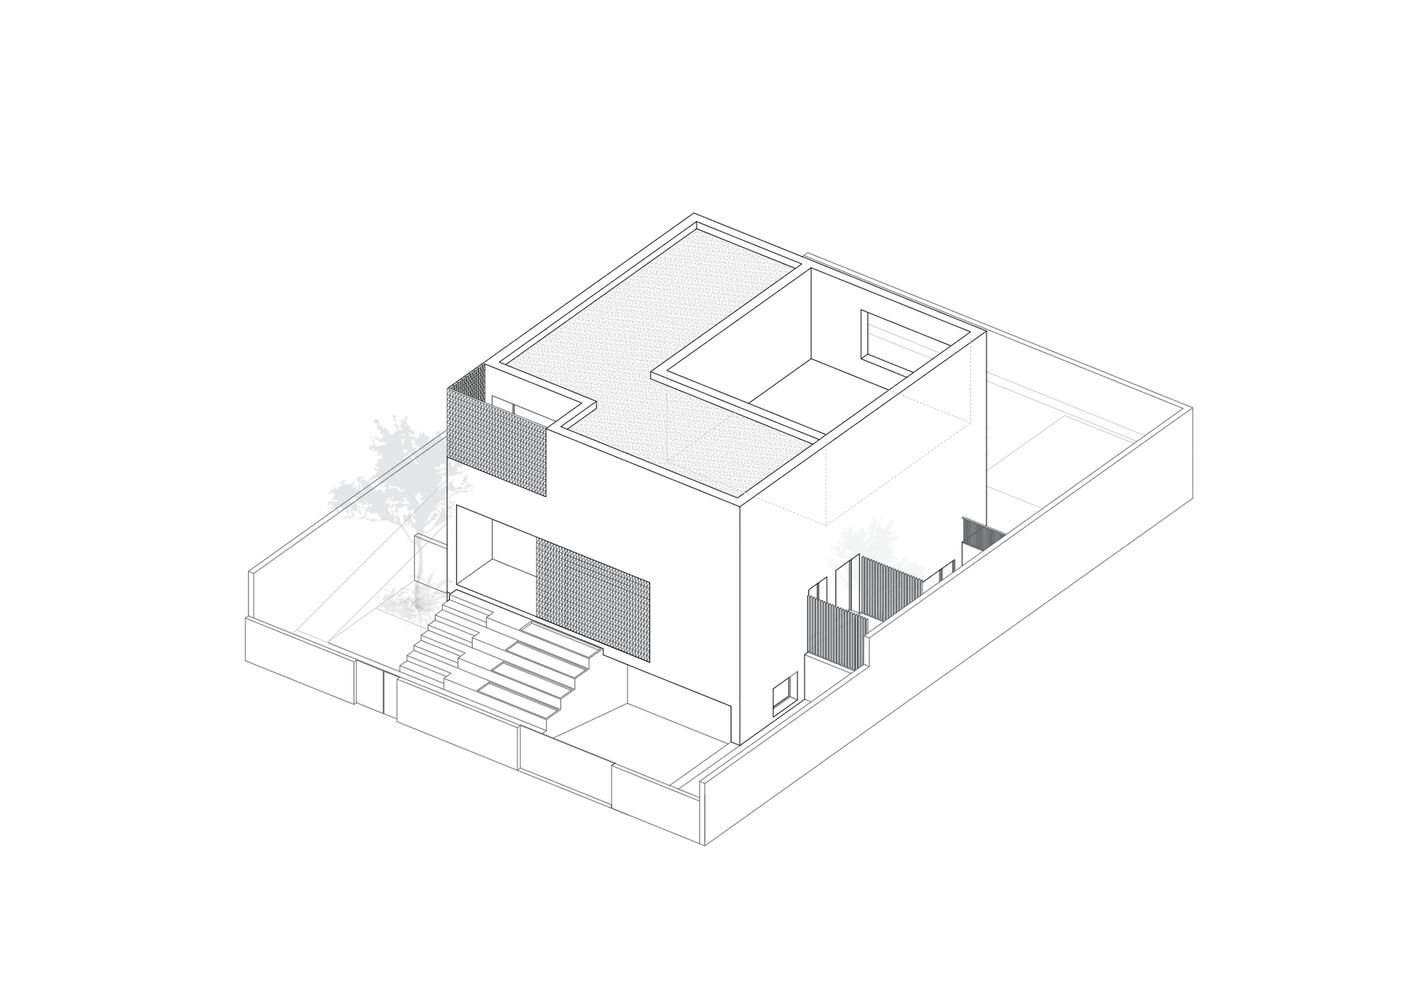 Andrea pons arquitectura,195㎡住宅设计,极简主义,极简主义风格,极简设计,住宅改造